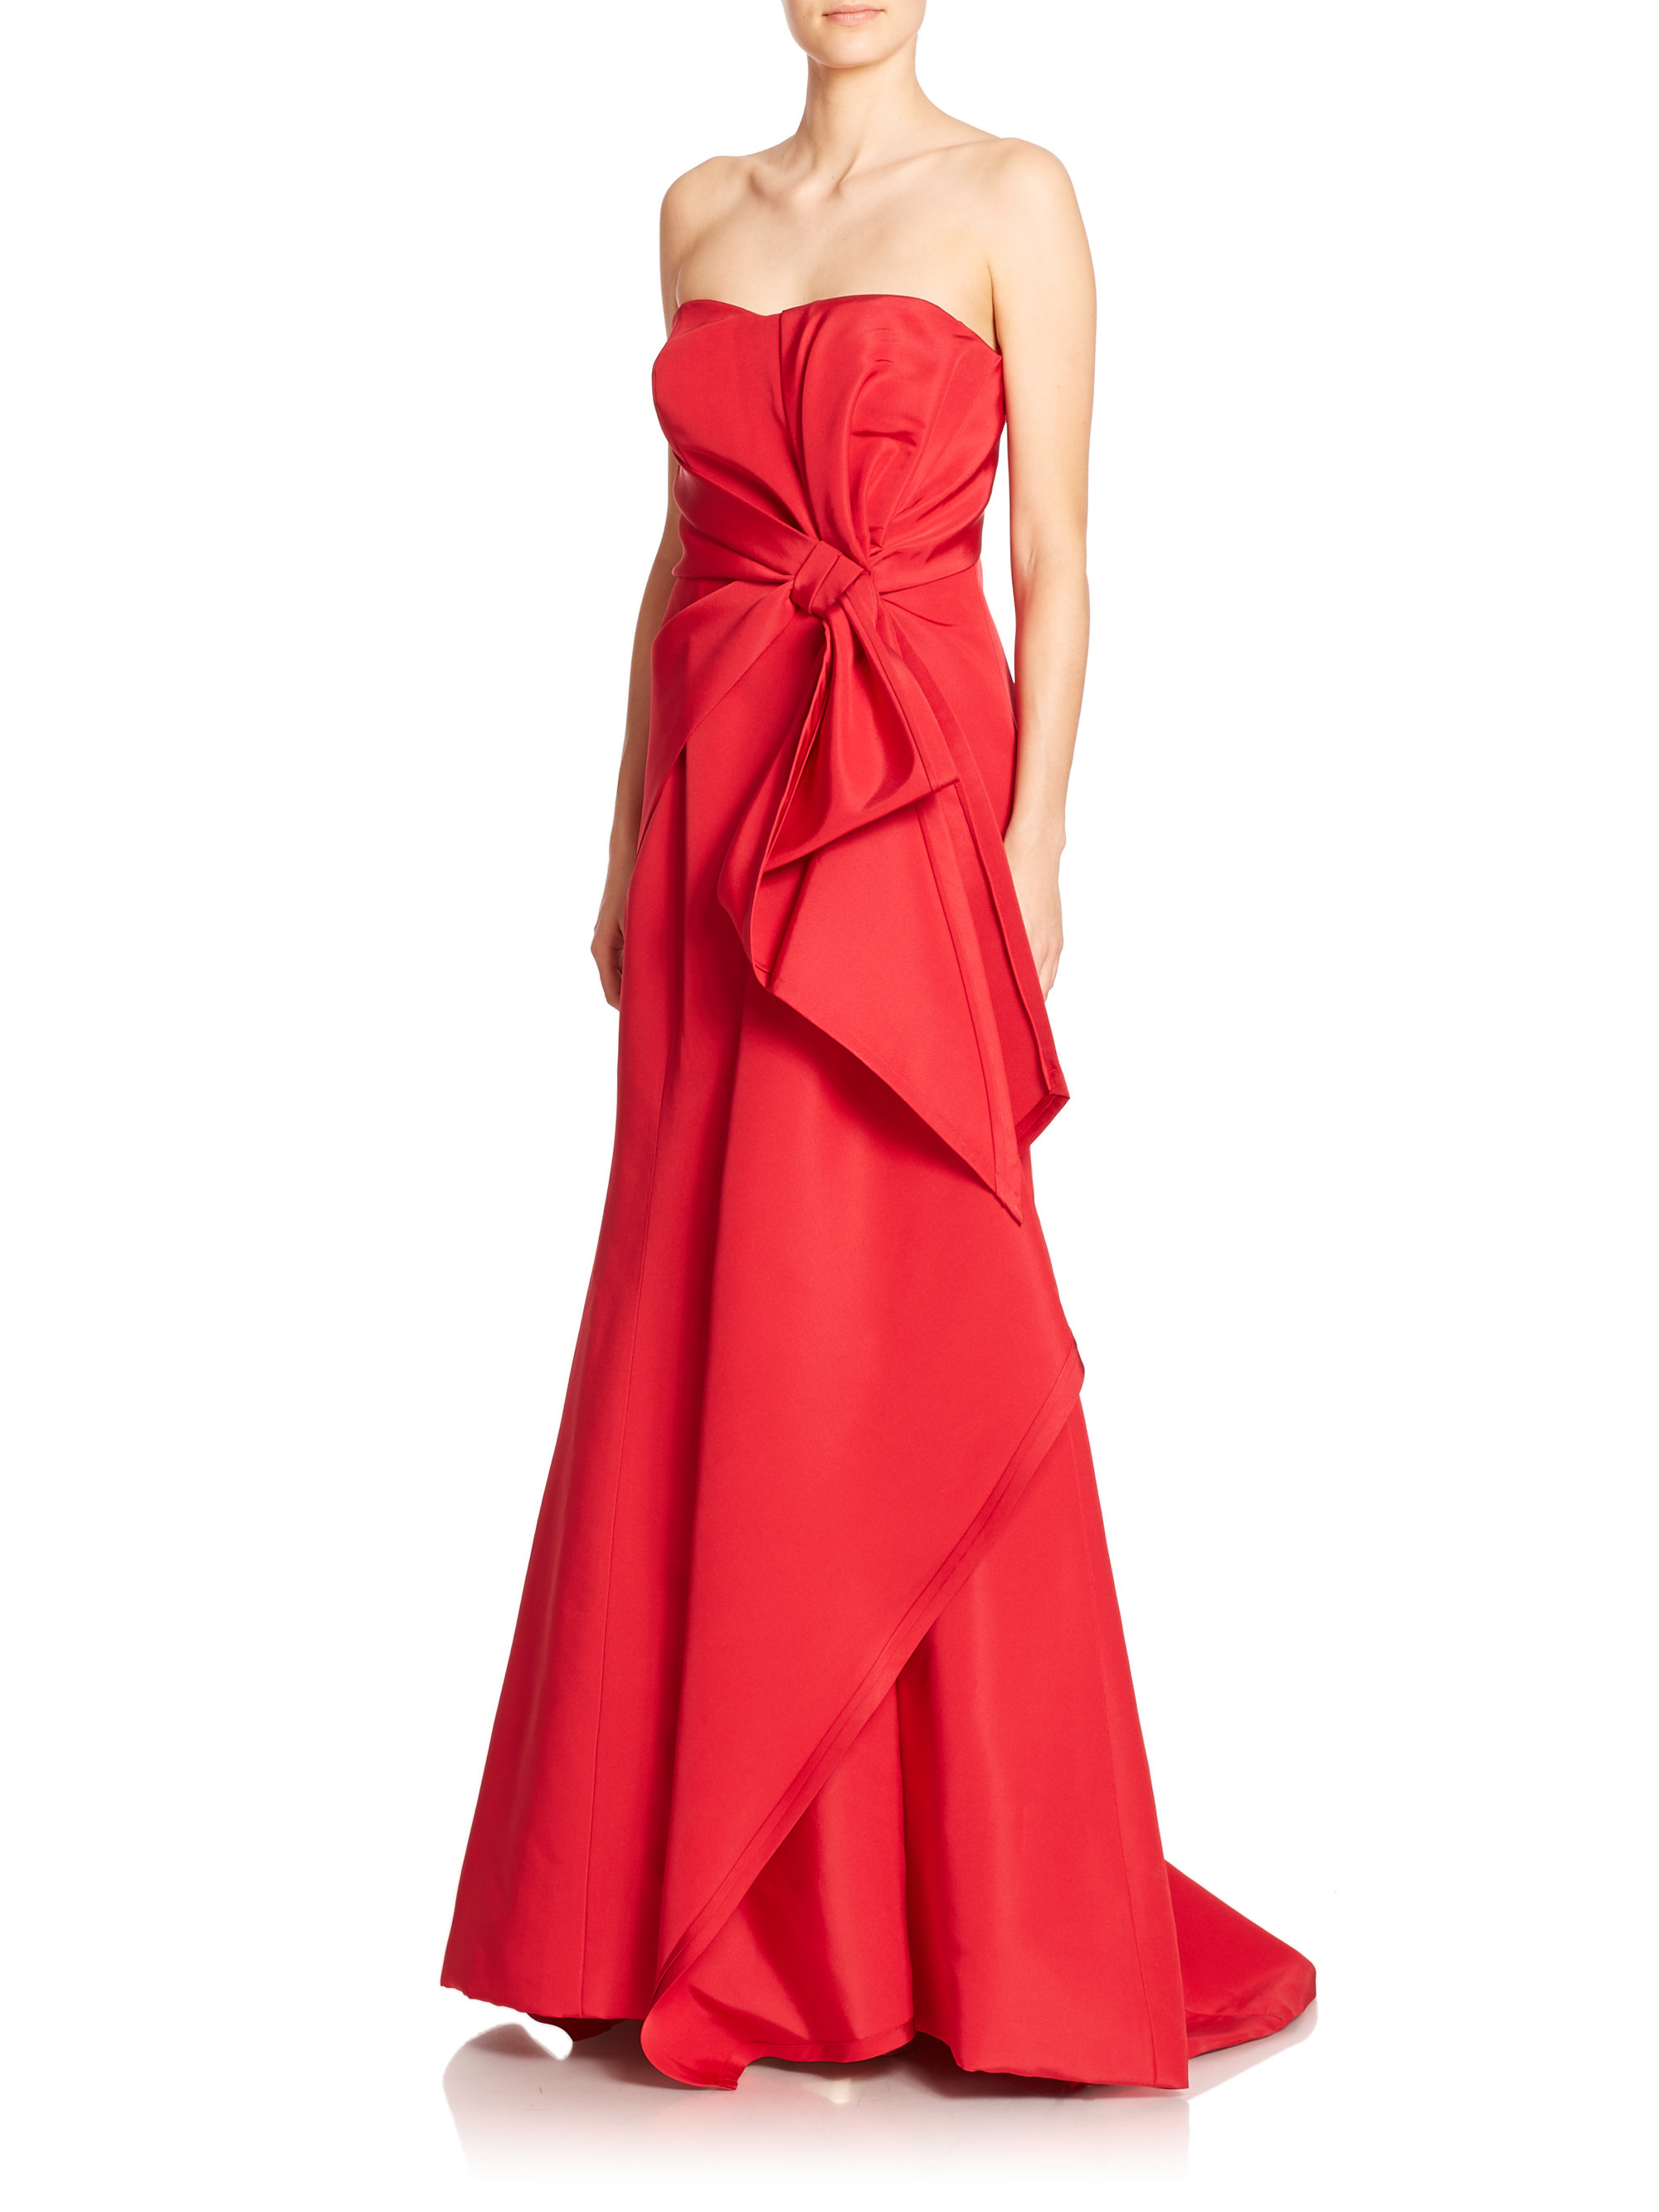 Lyst - Carolina Herrera Silk Sweetheart Gown in Red